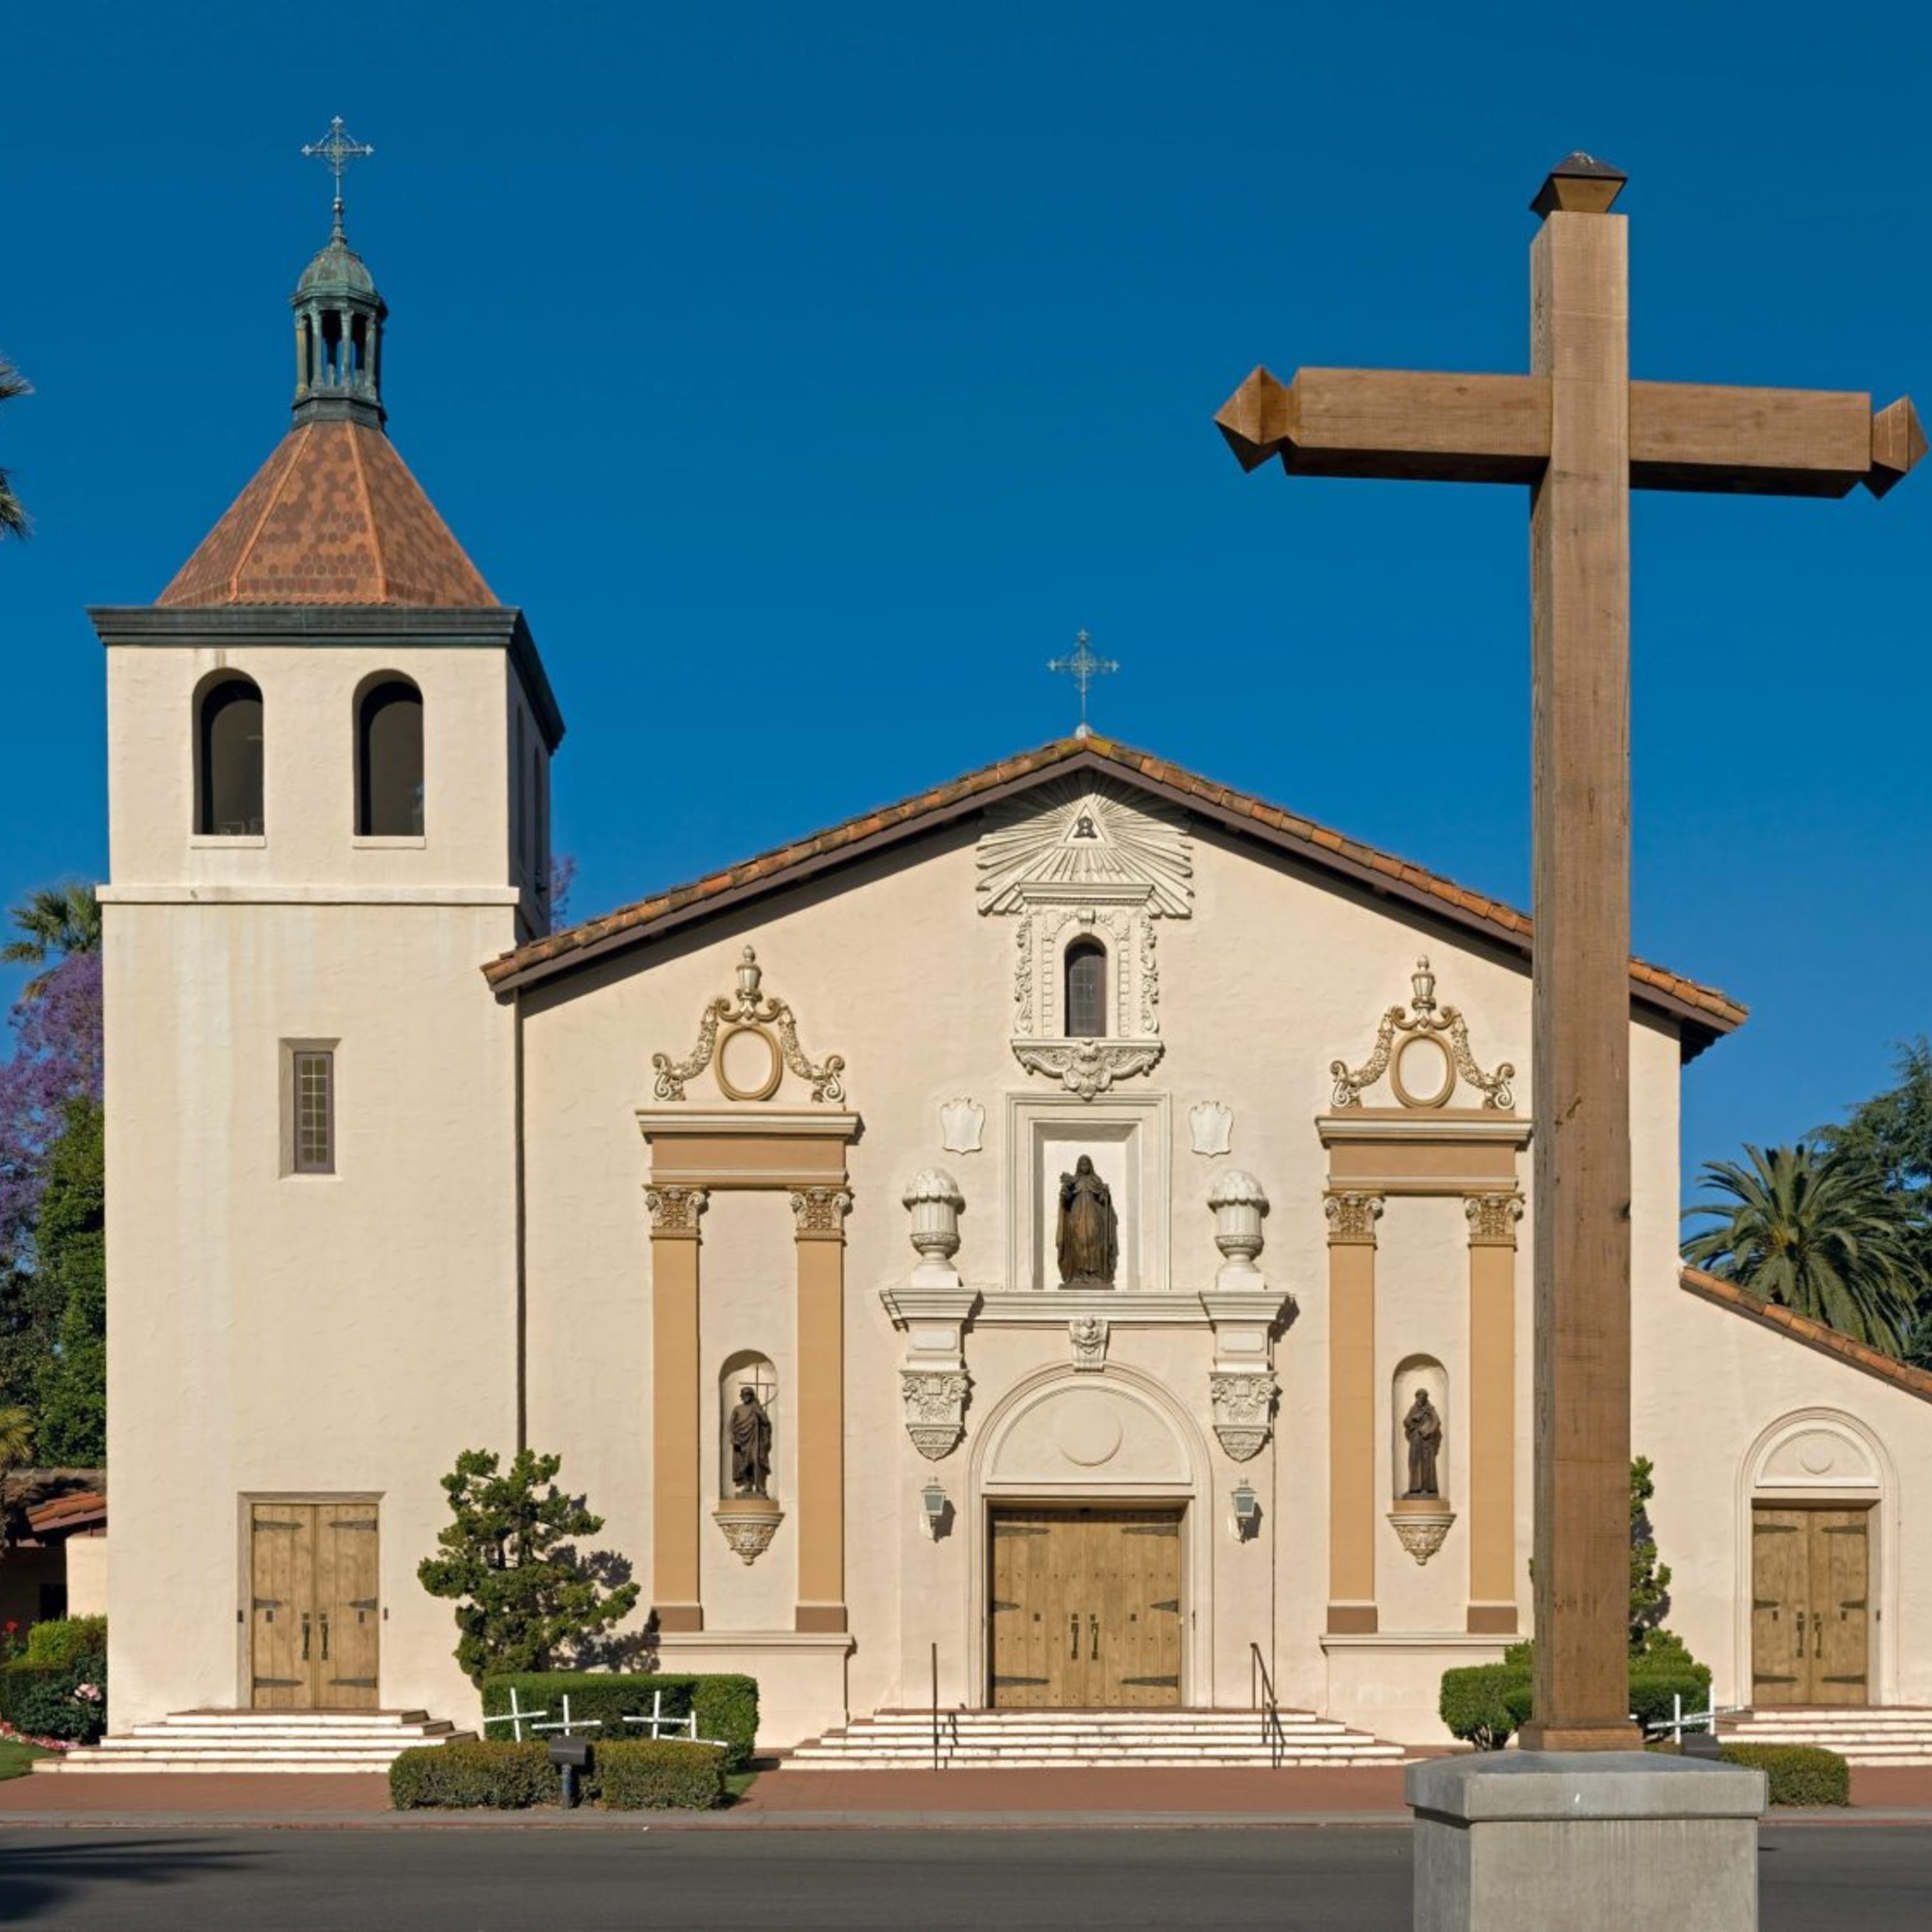 Mission Santa Clara